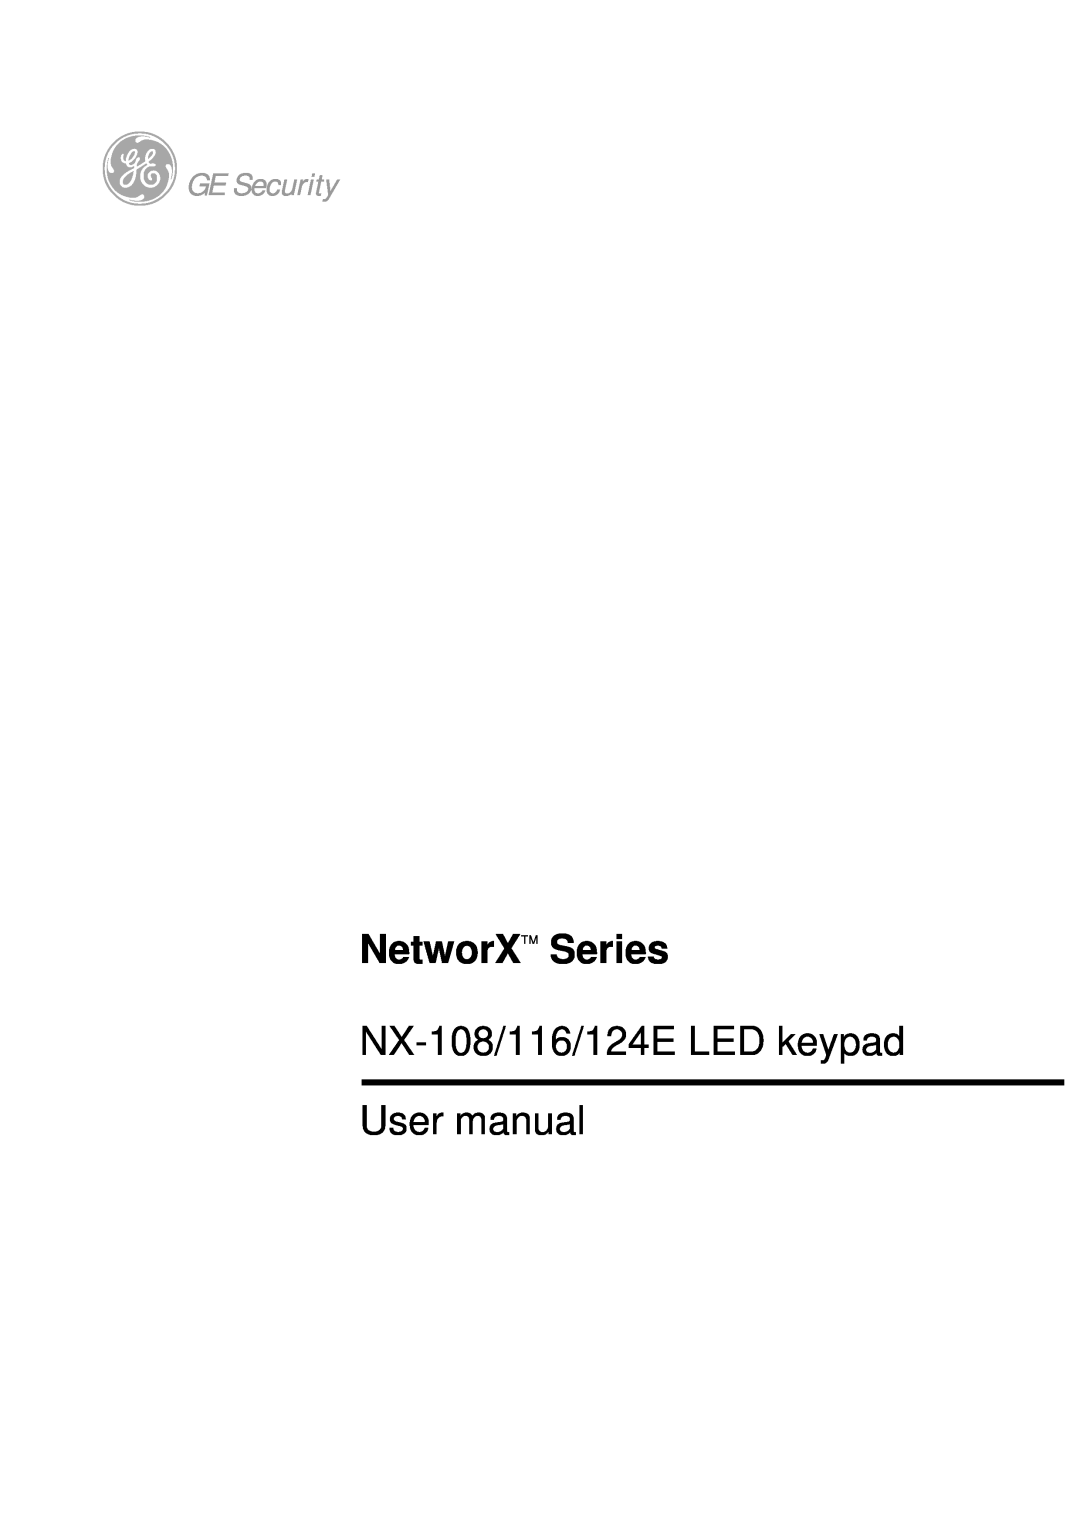 GE NX-108/116/124E user manual NetworXTM Series, gGE Security 